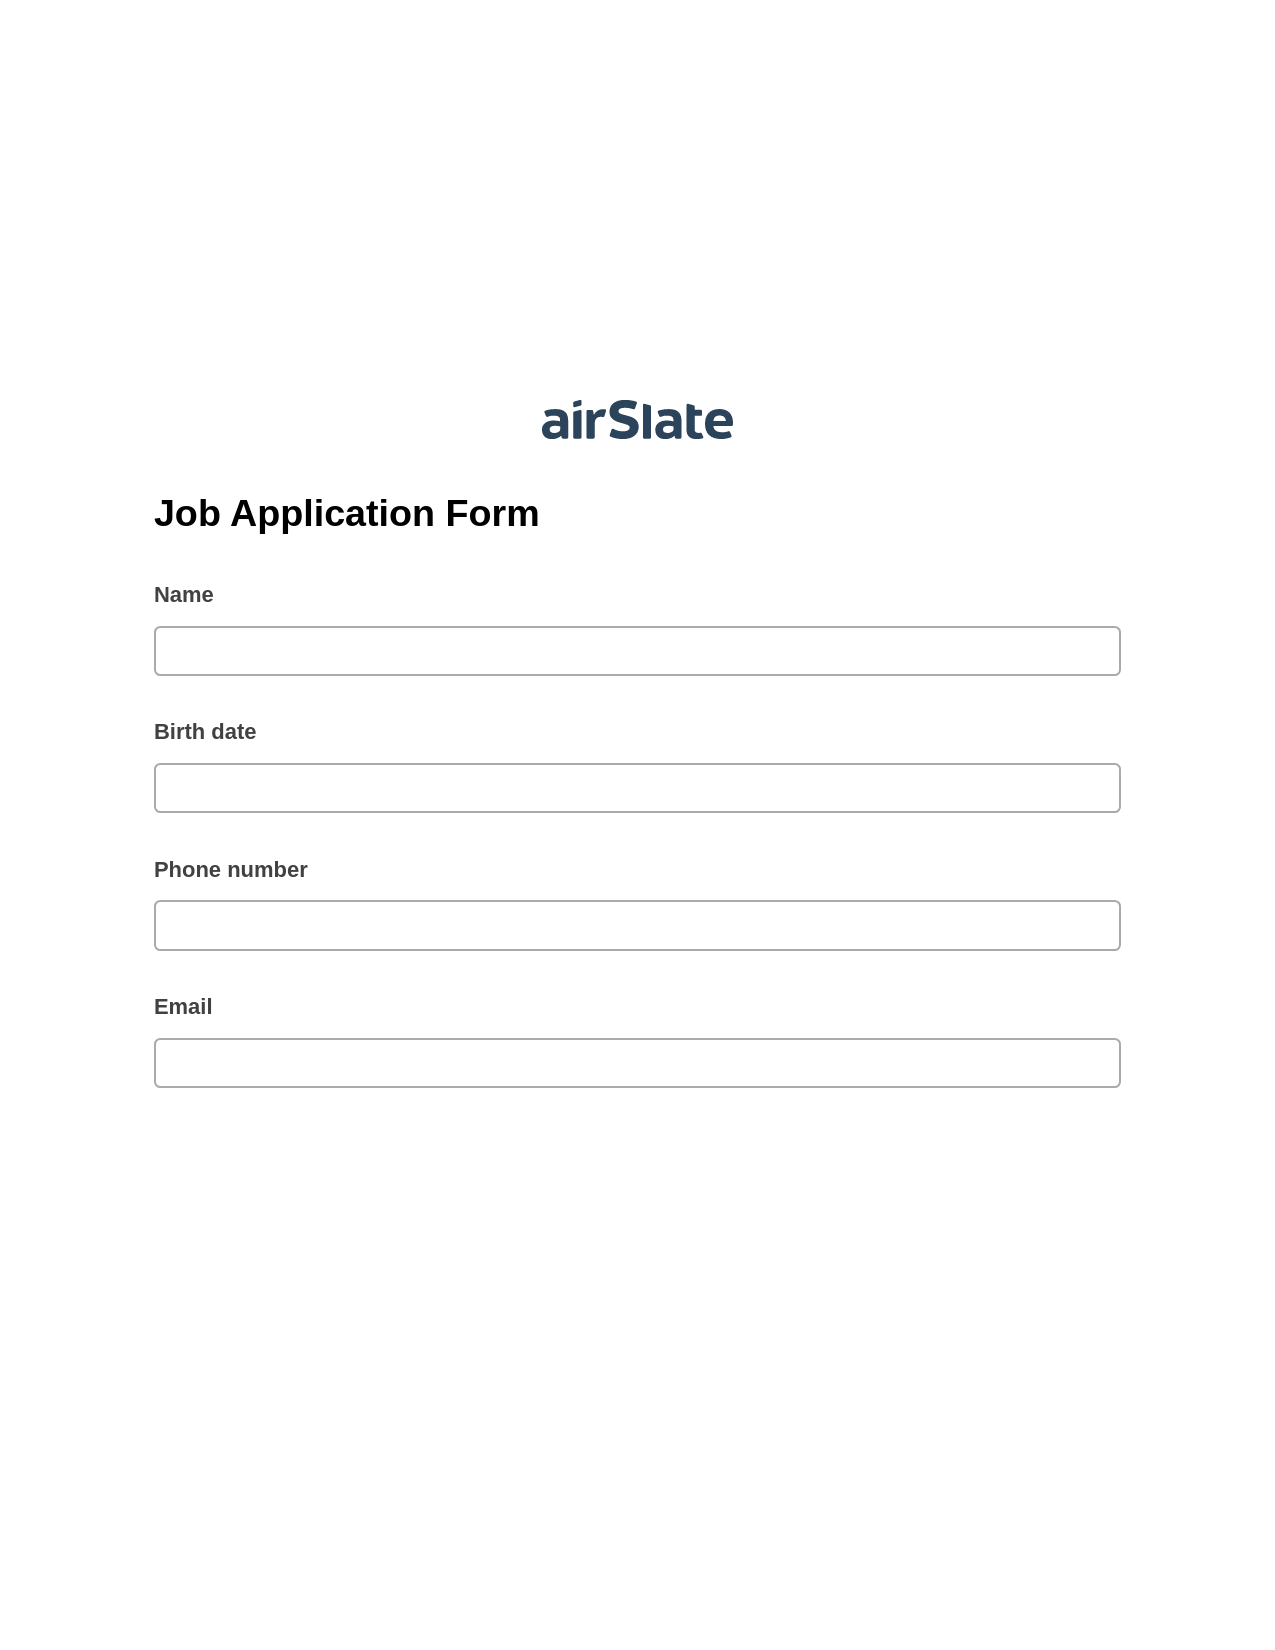 Job Application Form Pre-fill from Google Sheet Dropdown Options Bot, Revoke Access Bot, Box Bot